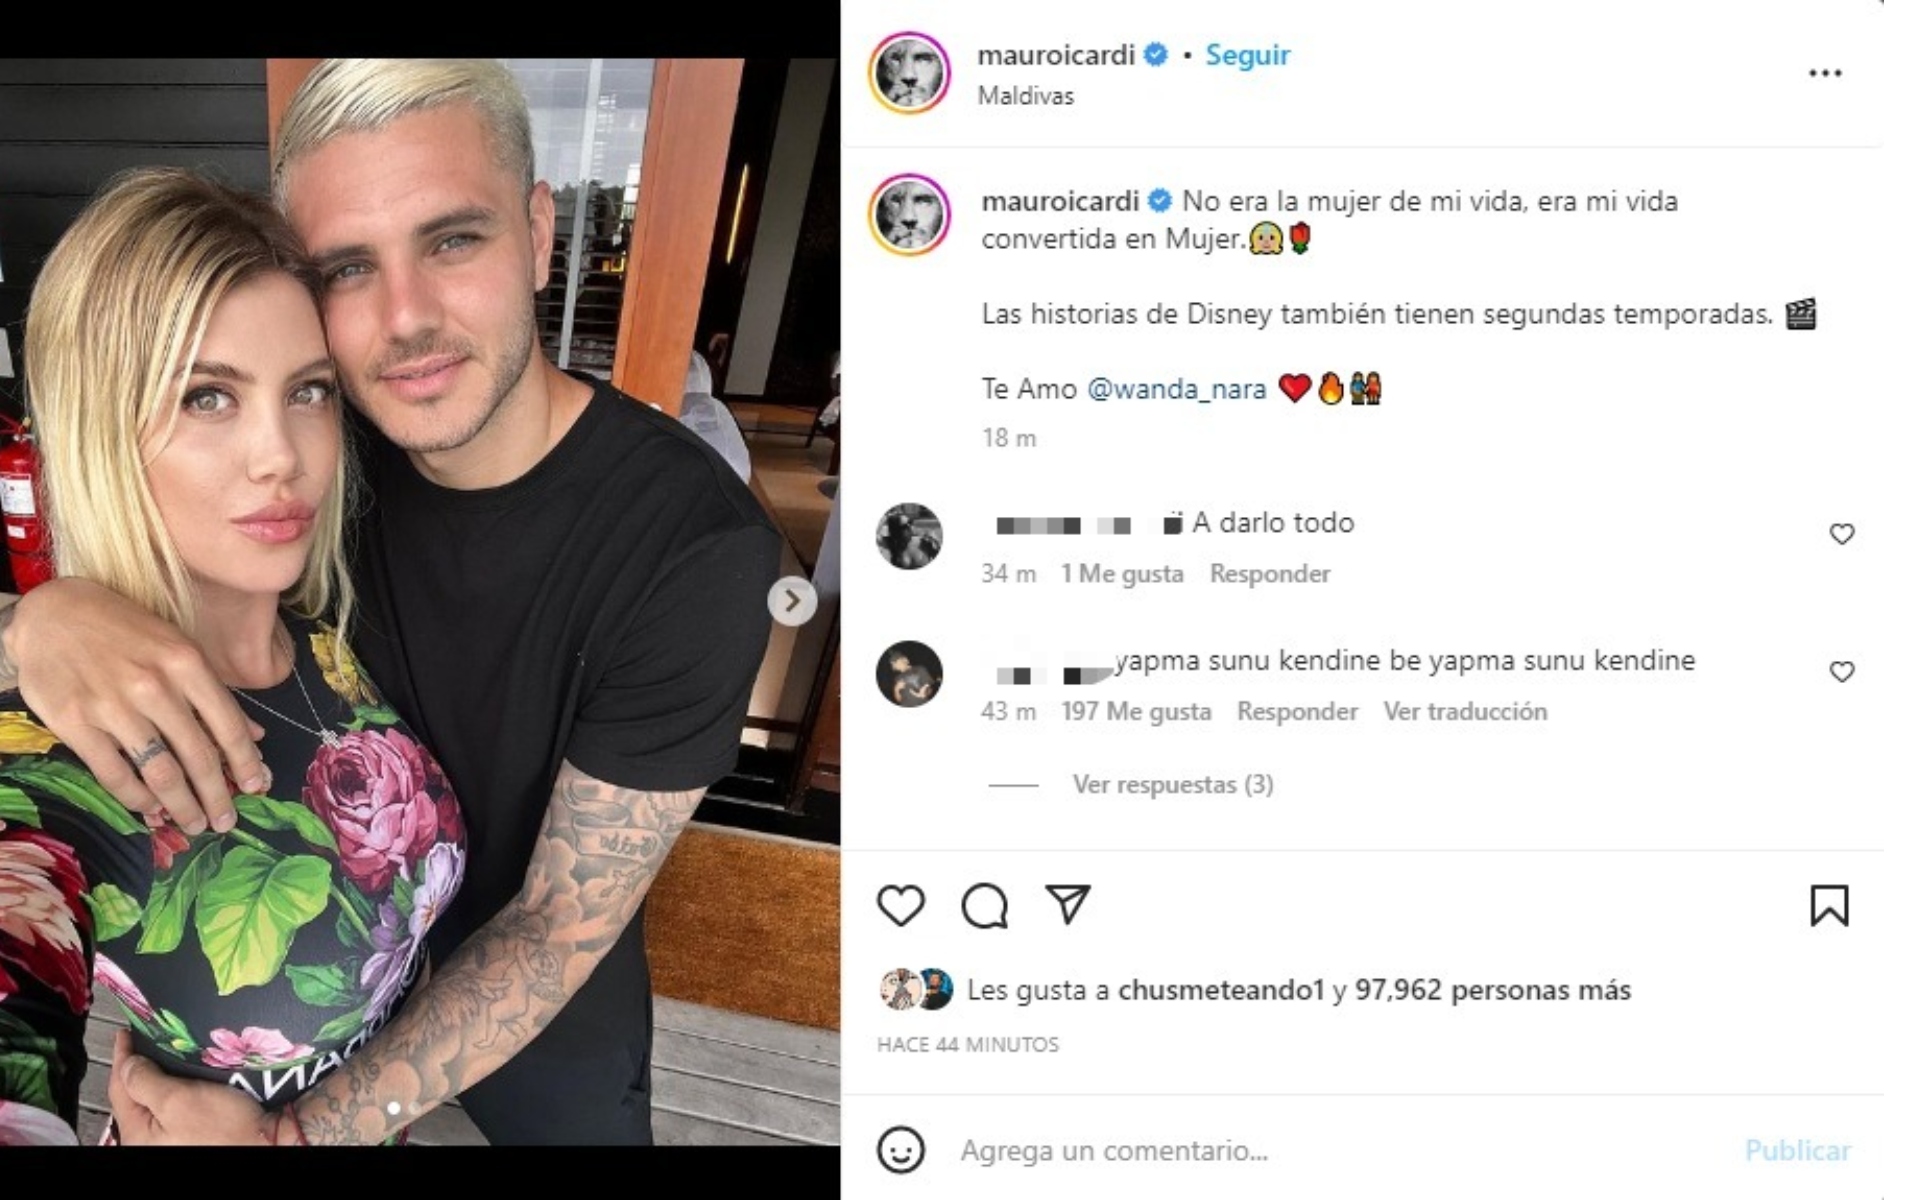 Mauro Icardi's Post Confirming Reconciliation With Wanda Nara